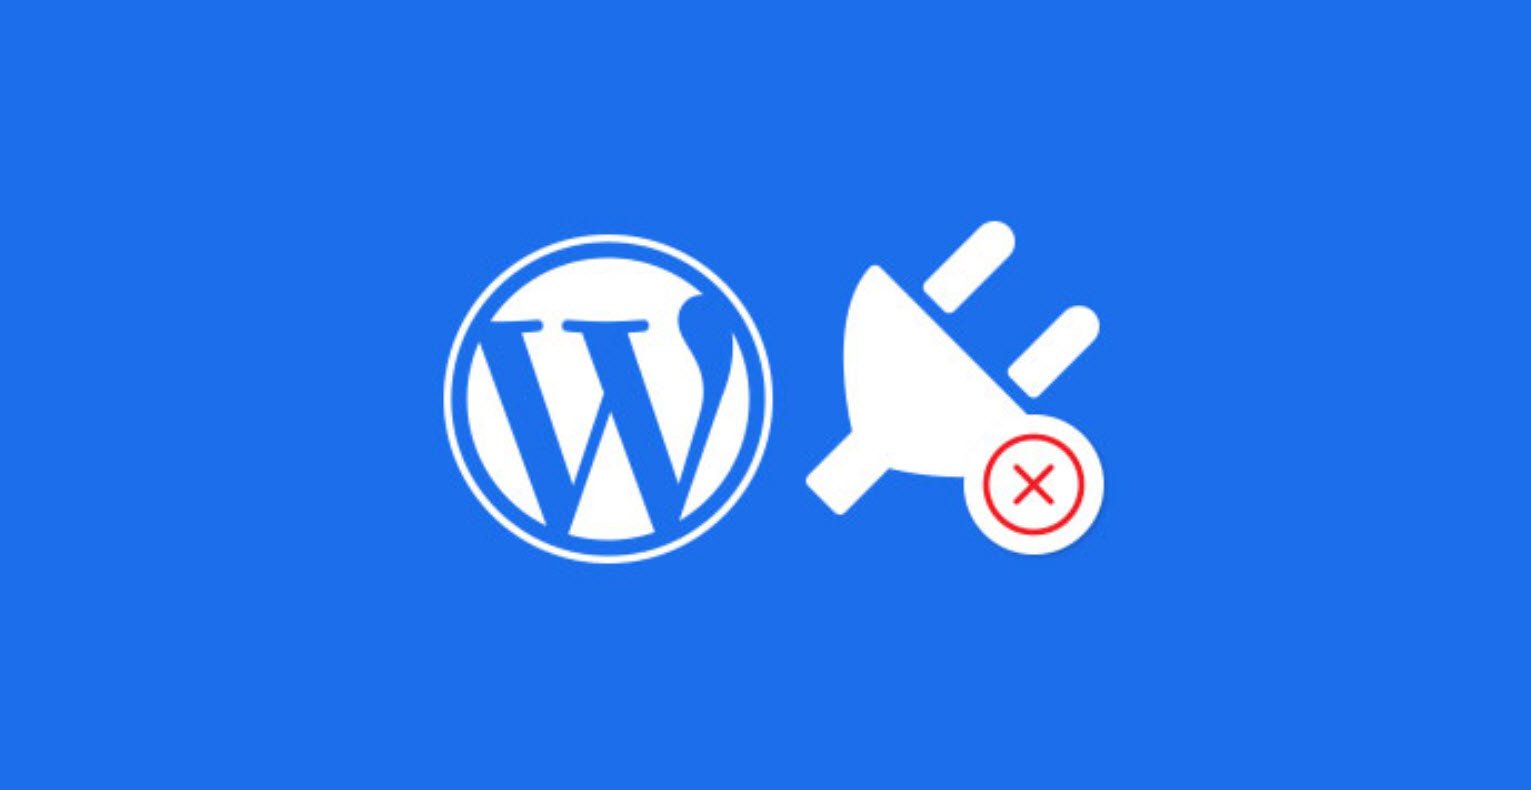 WordPress Automatic Plugin